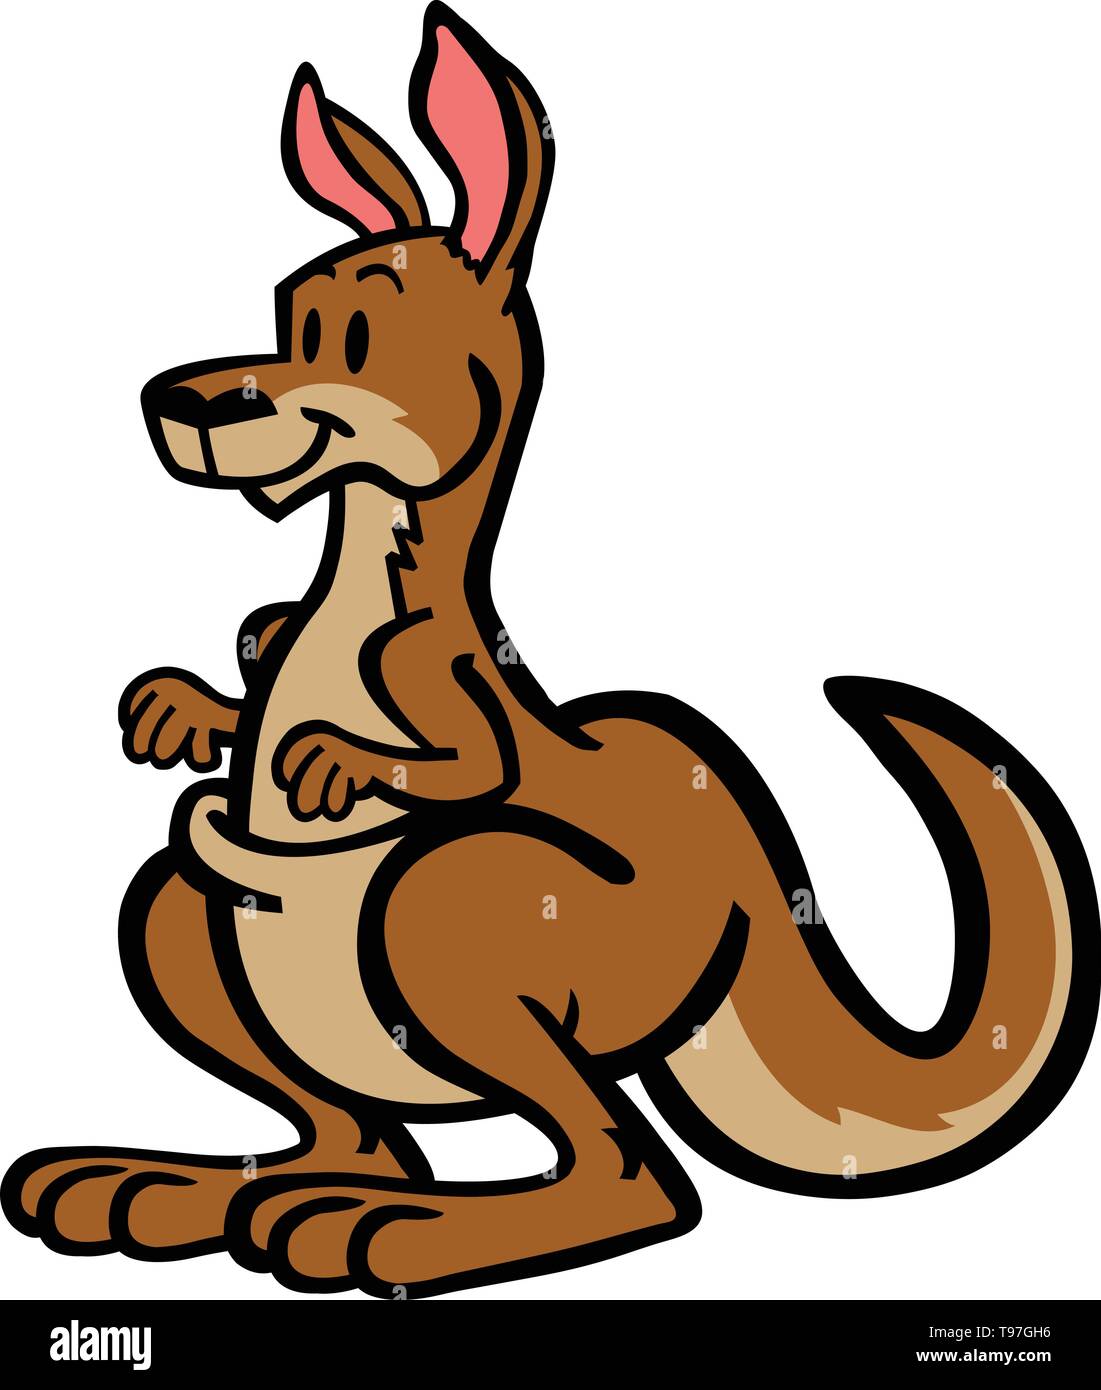 Kangaroo cartoon animal illustration Stock Vector Image & Art - Alamy